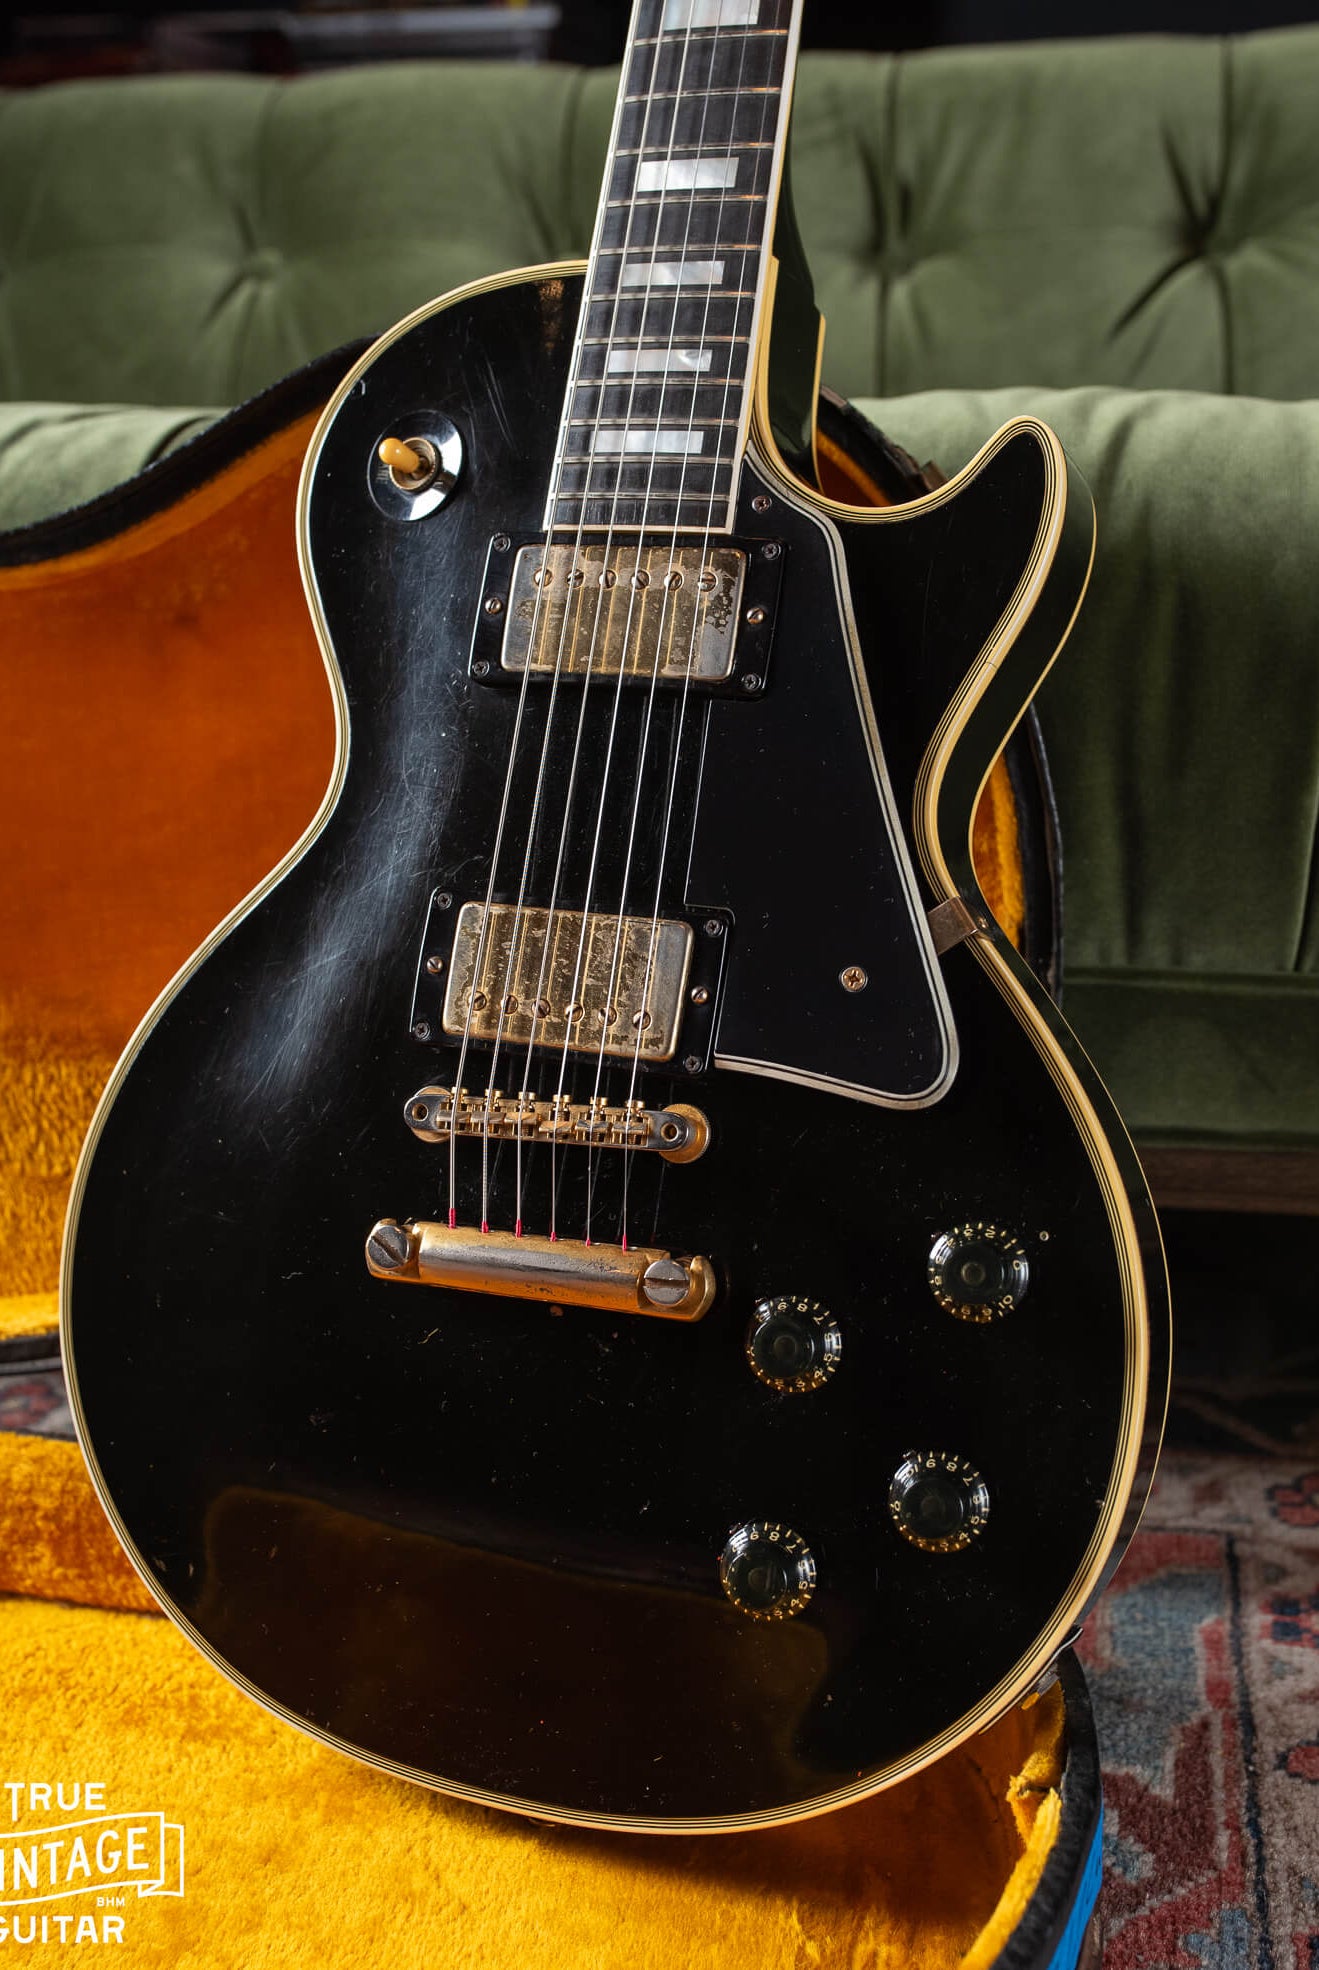 1958 Gibson Les Paul Custom Black with two humbucking pickups